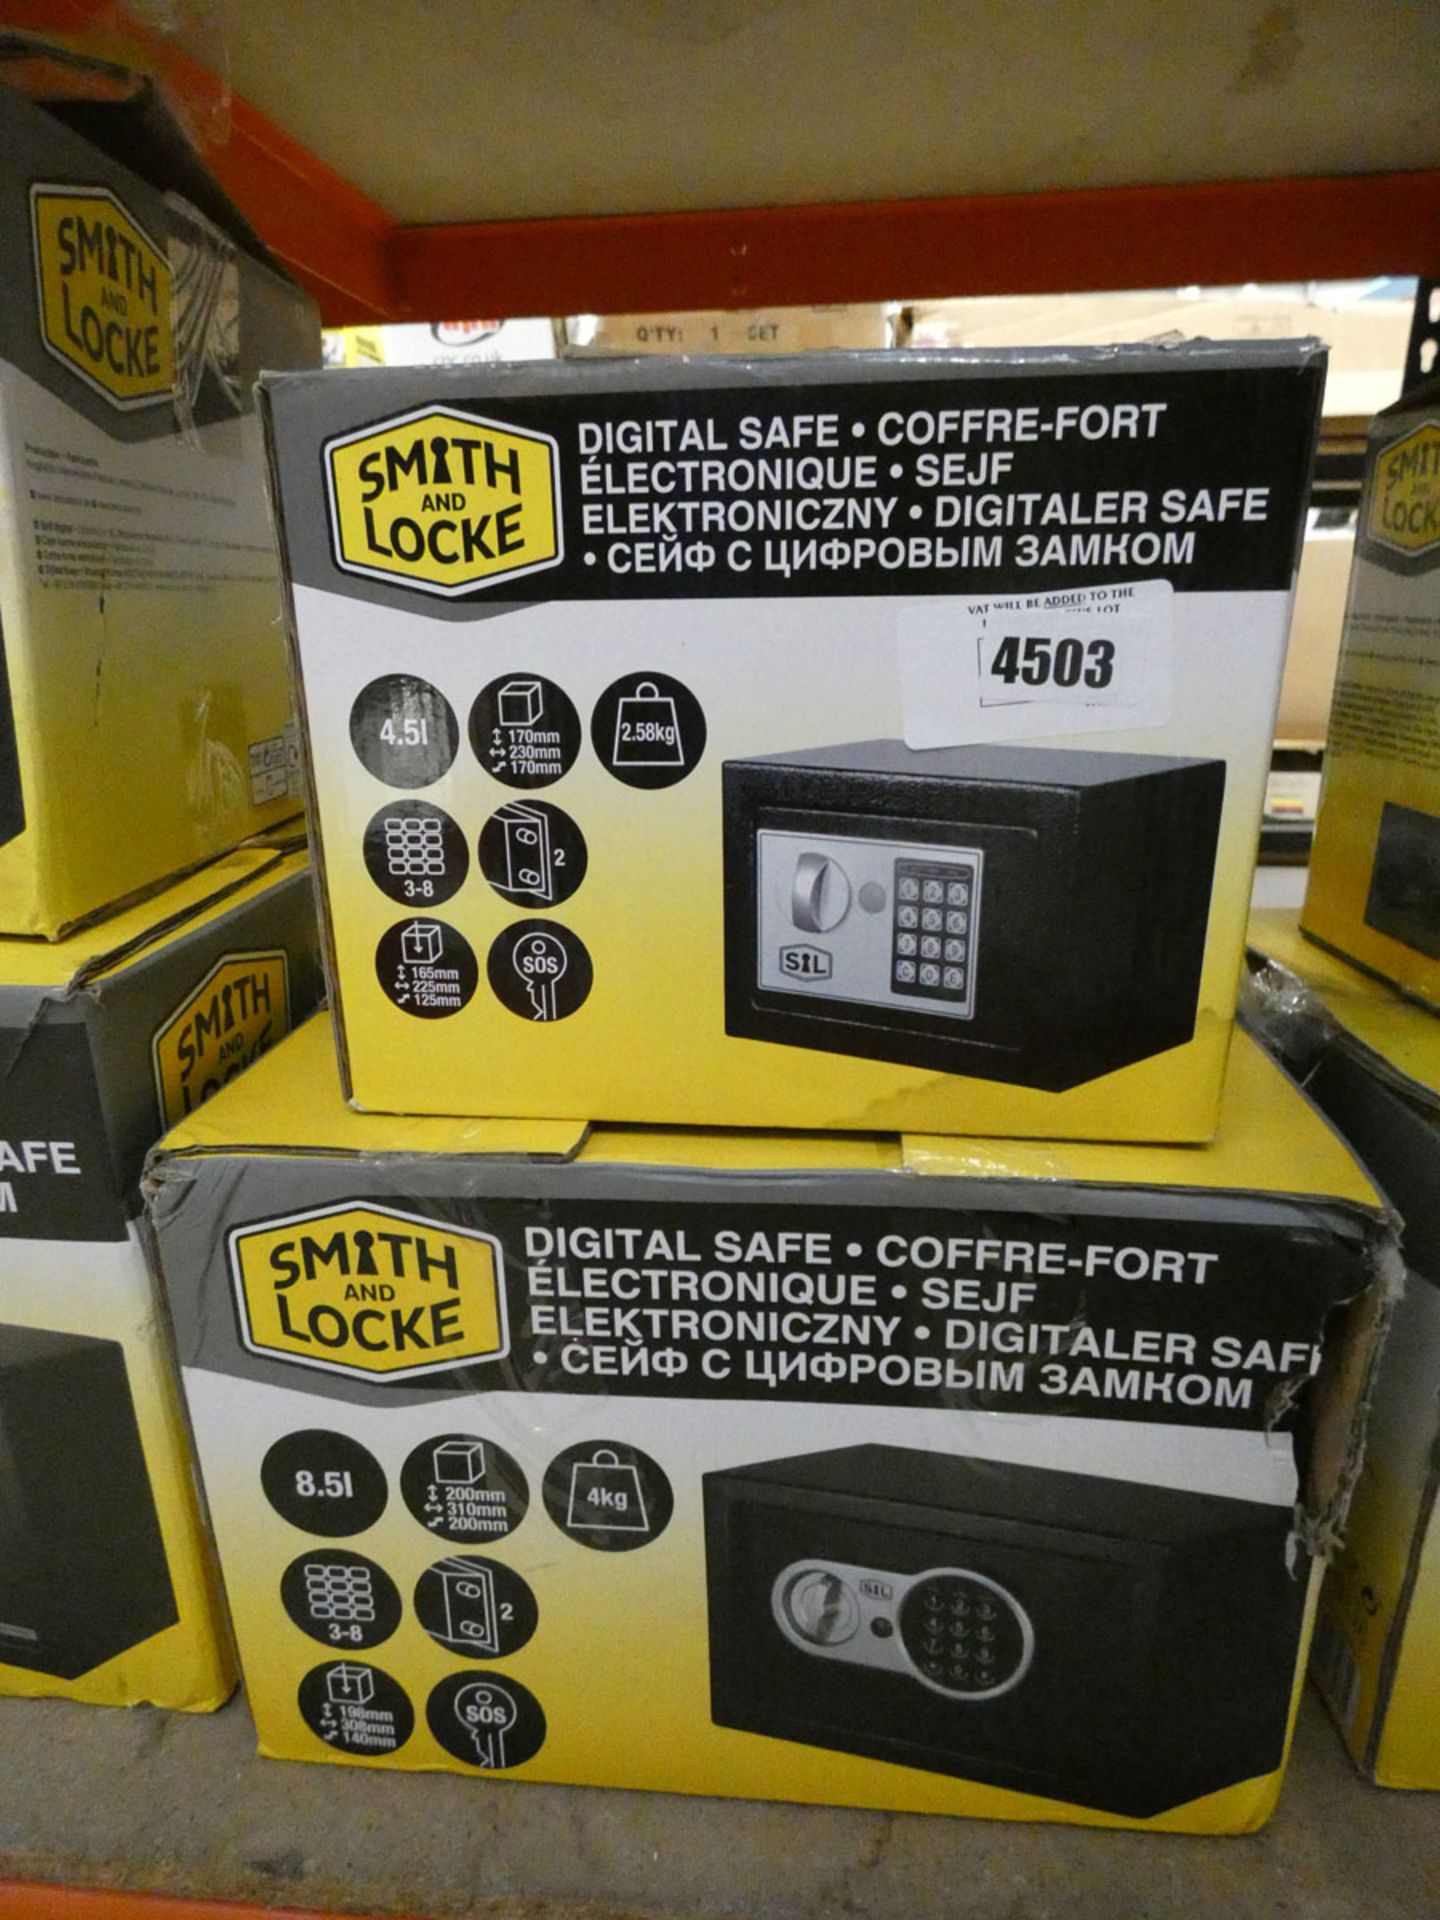 2 small digital safes